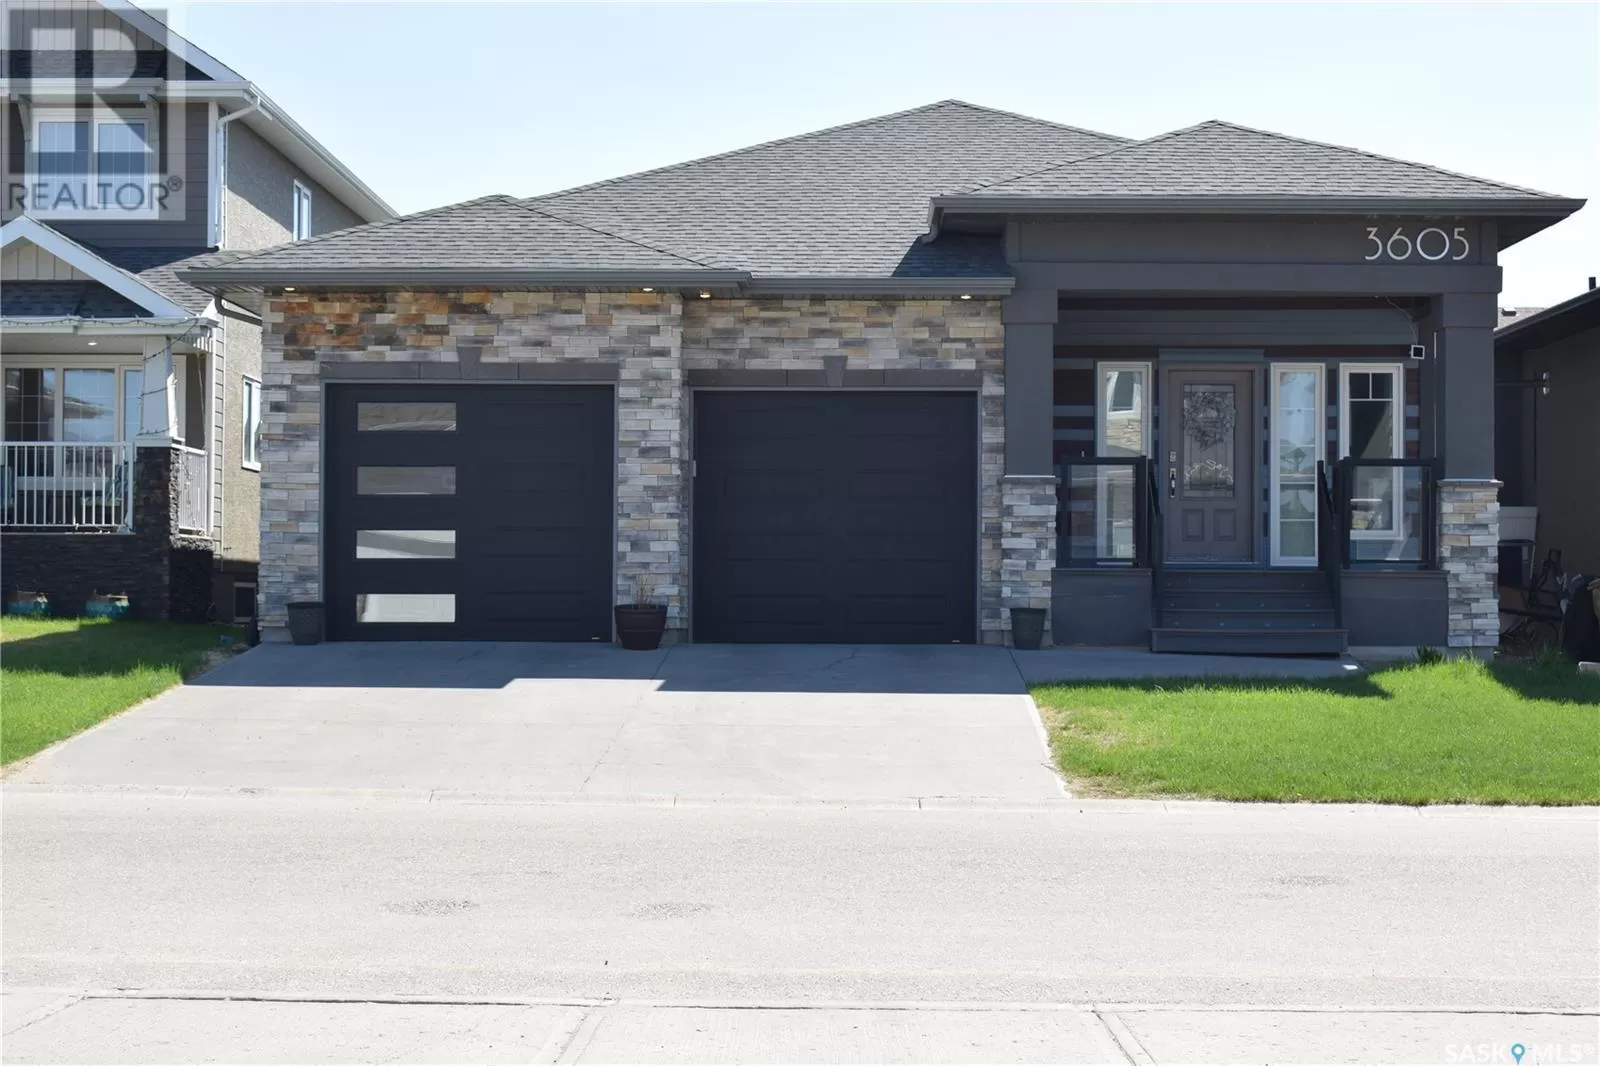 House for rent: 3605 Green Creek Road, Regina, Saskatchewan S4V 3H3